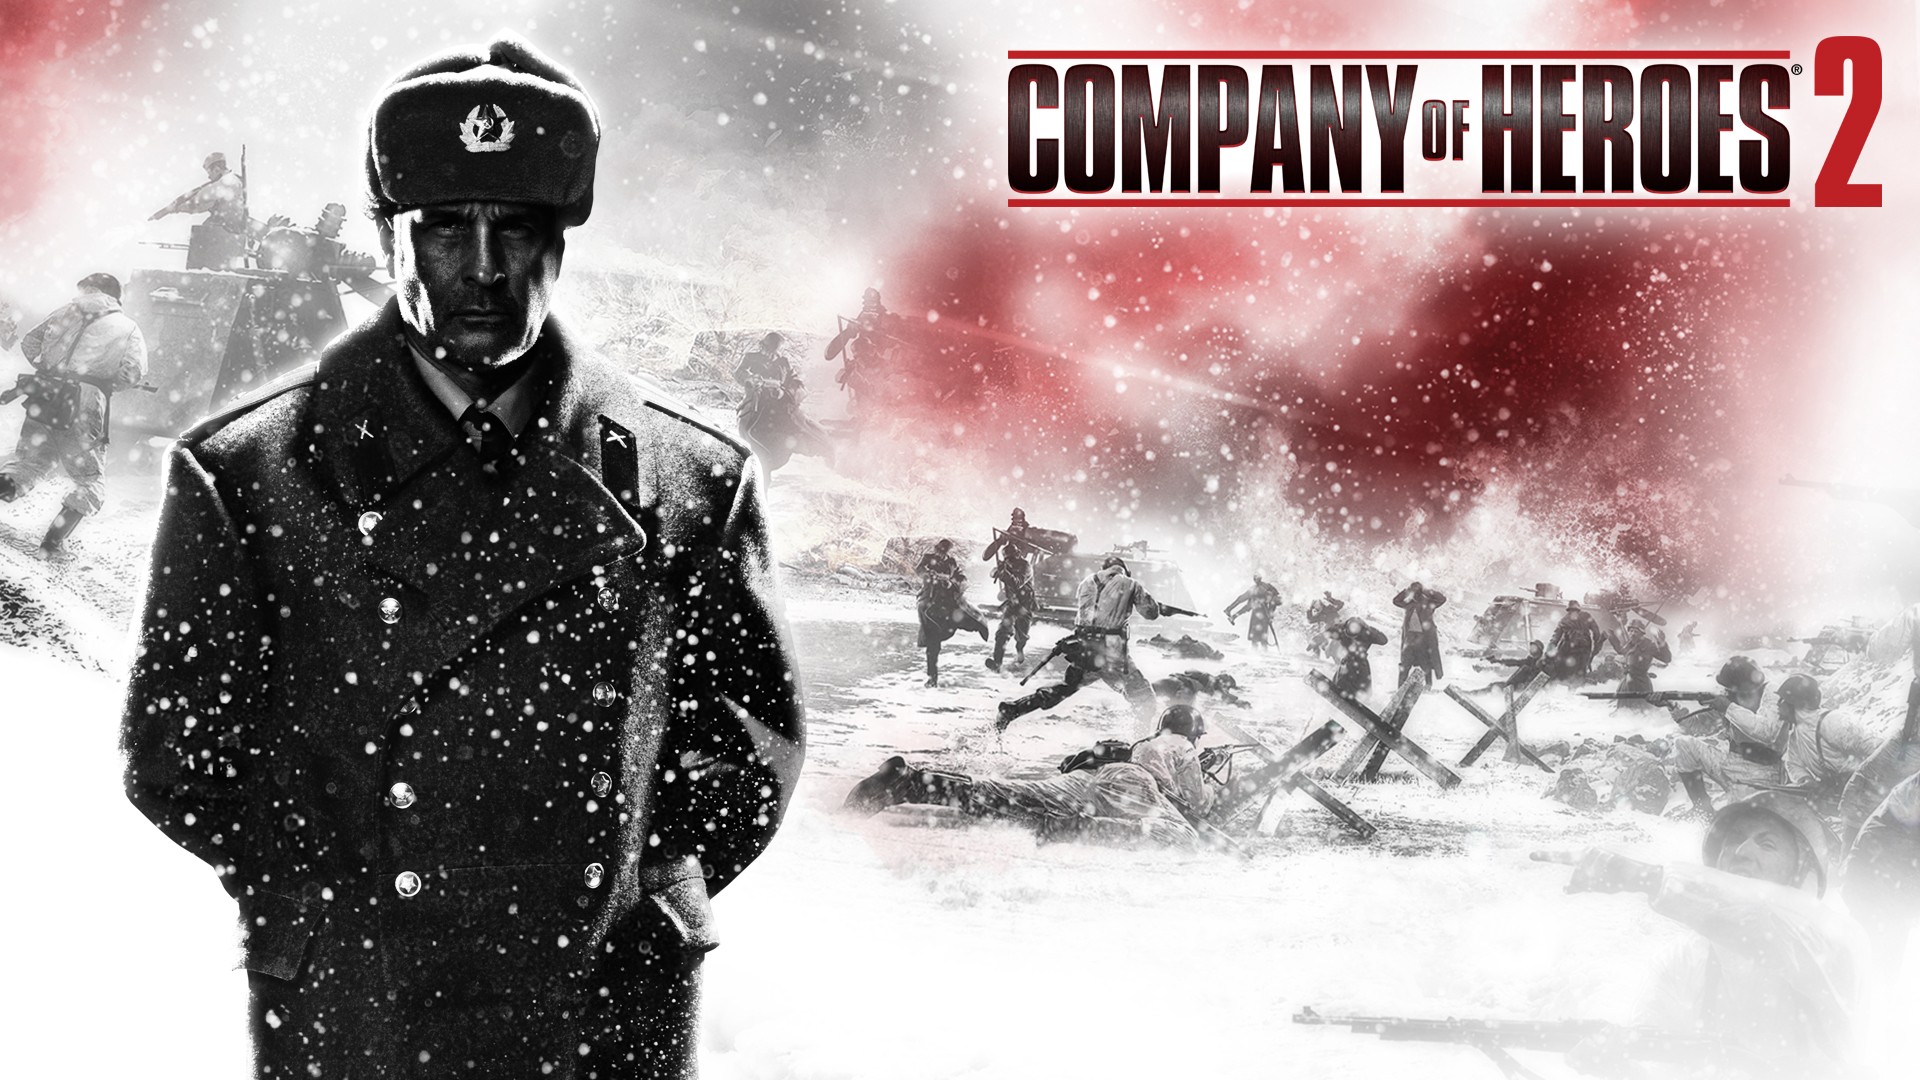 Company of Heroes Company of Heroes 2 Militaires Neige jeu vidéo, soldat, soldats Jeux